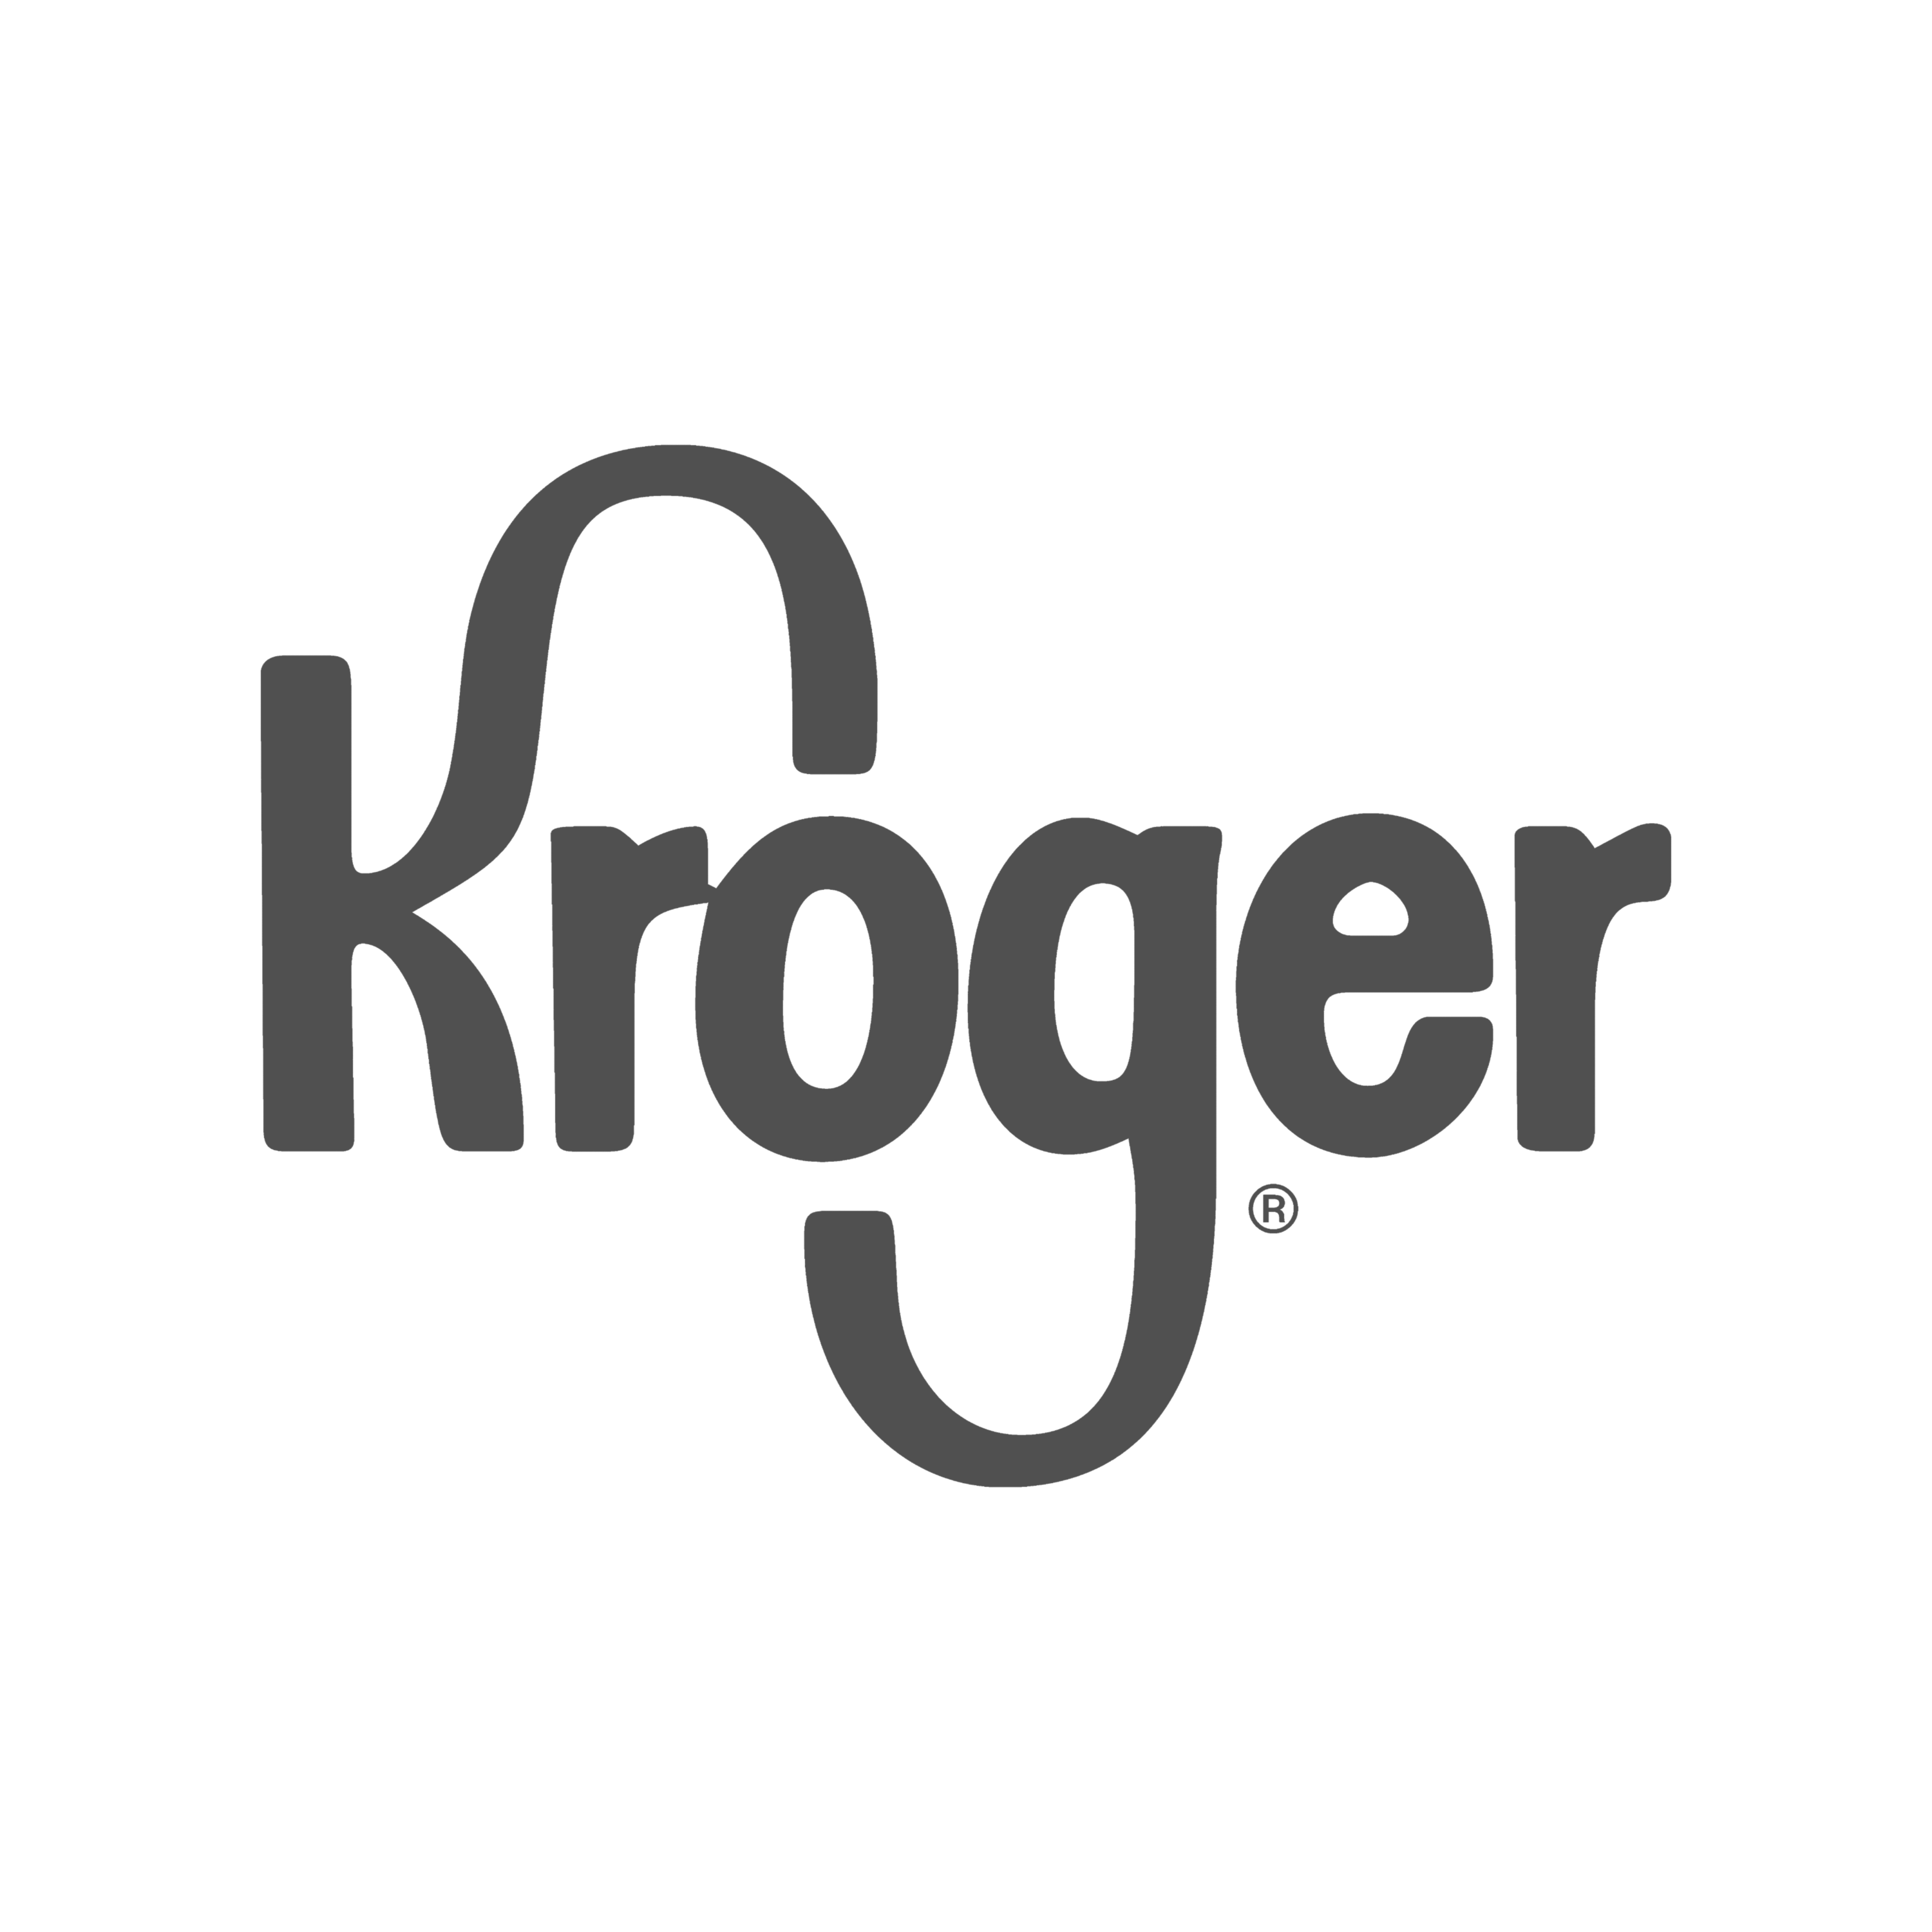 A kroger logo